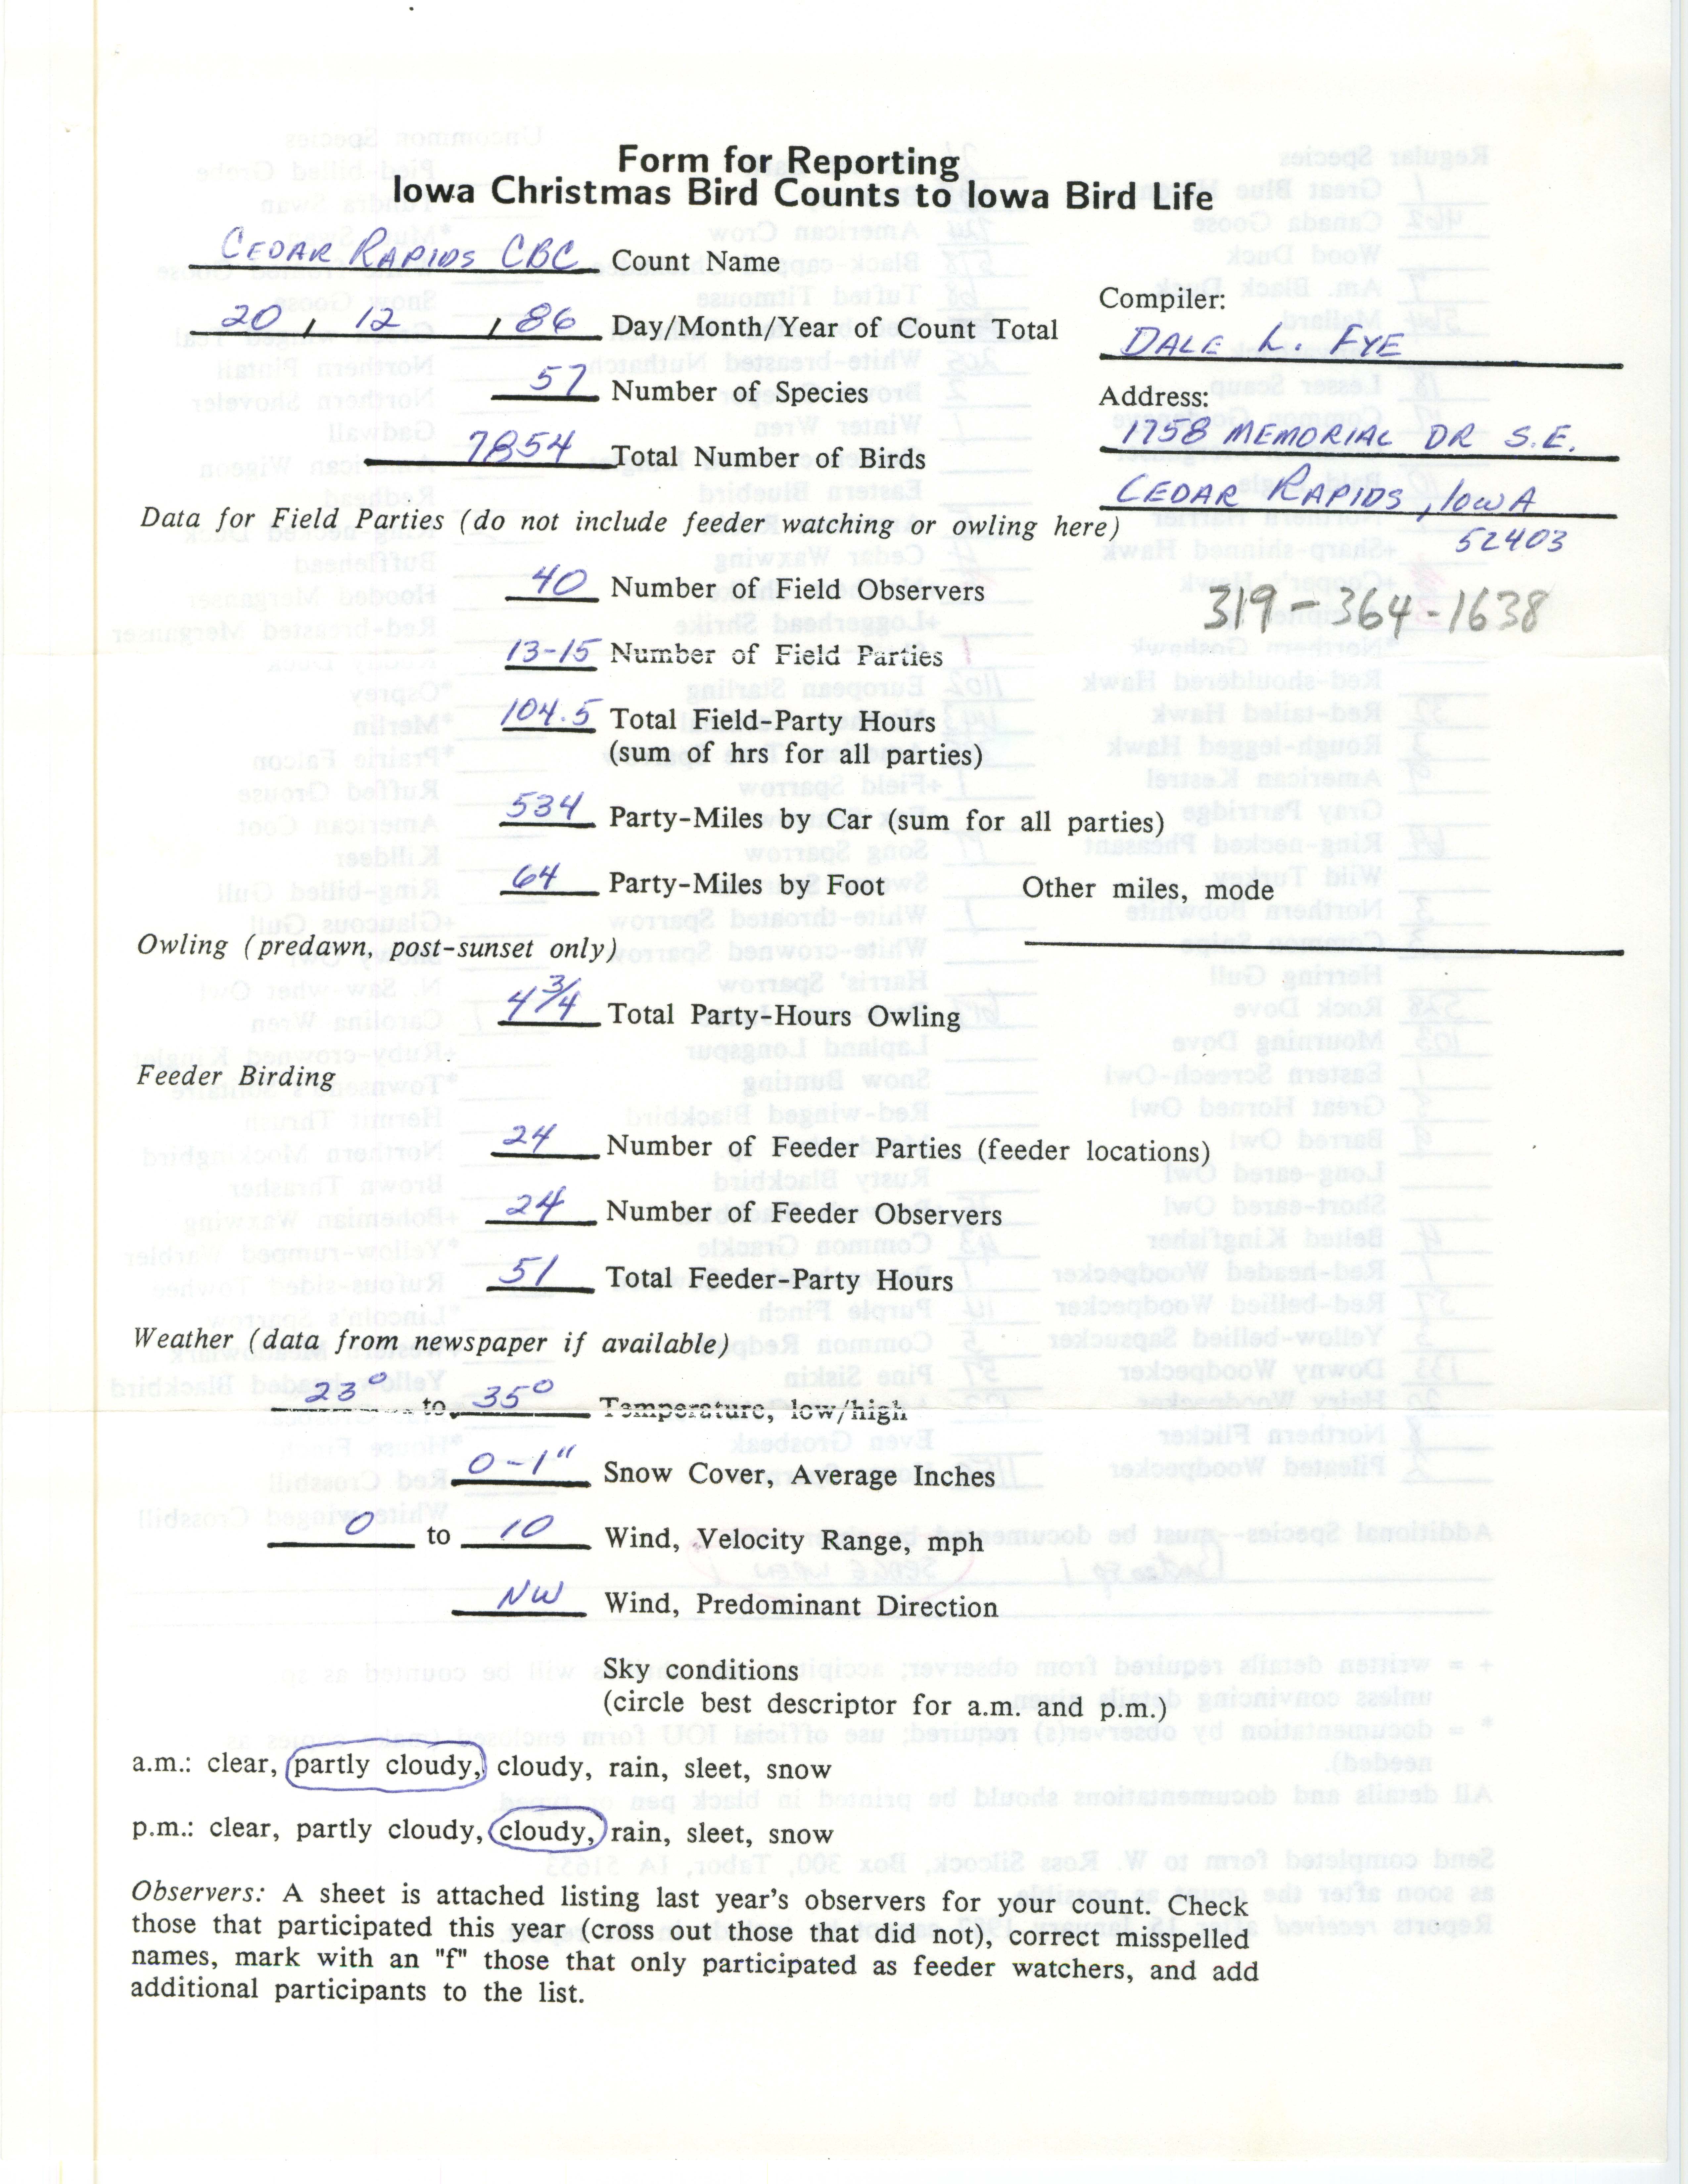 Form for reporting Iowa Christmas bird counts to Iowa Bird Life, Dale Fye, December 20, 1986